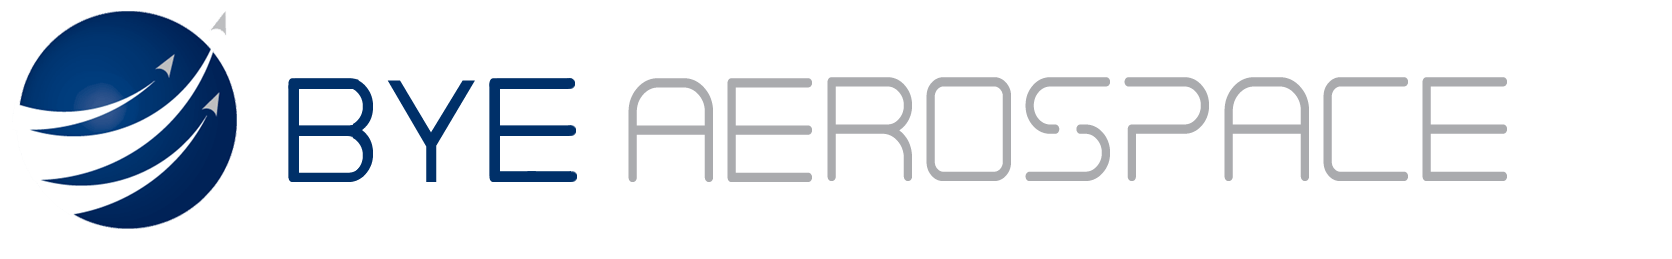 American Aero Corp Logo - Front Page - Bye Aerospace